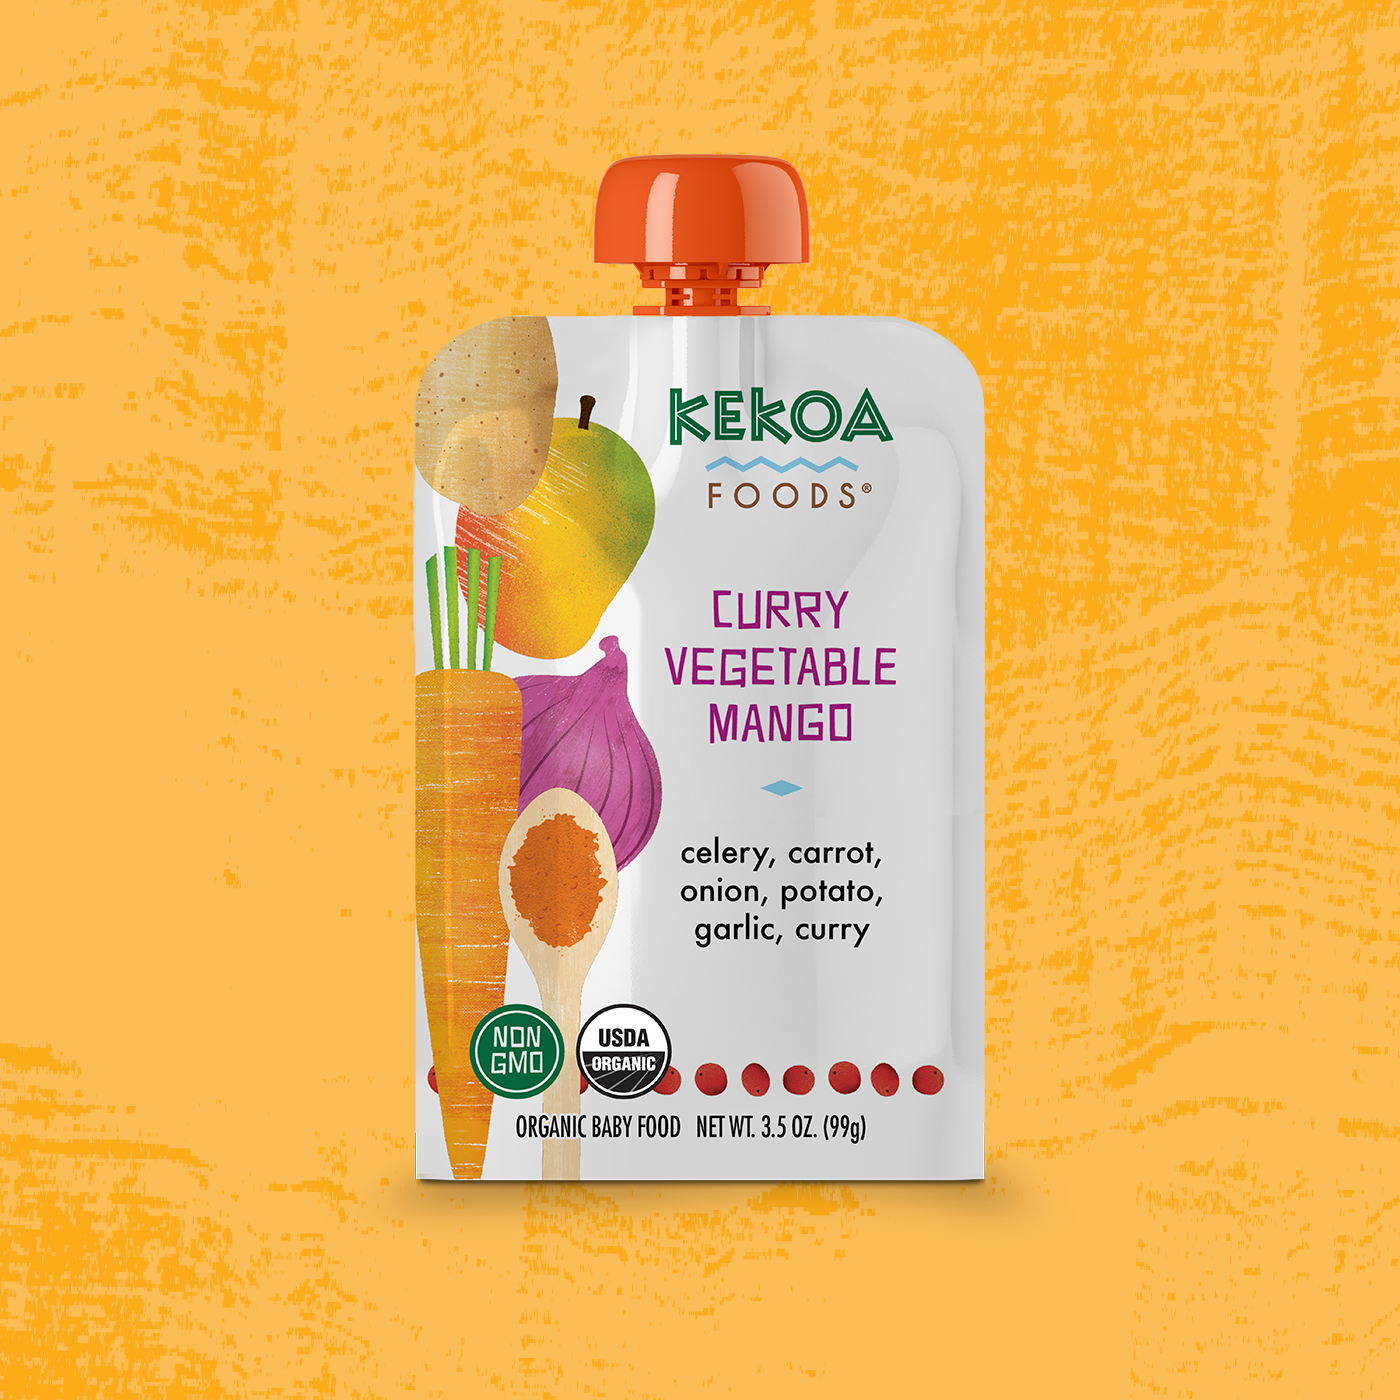 Kekoa Foods - Curry Vegetable Mango 6 innerpacks per case 3.5 oz